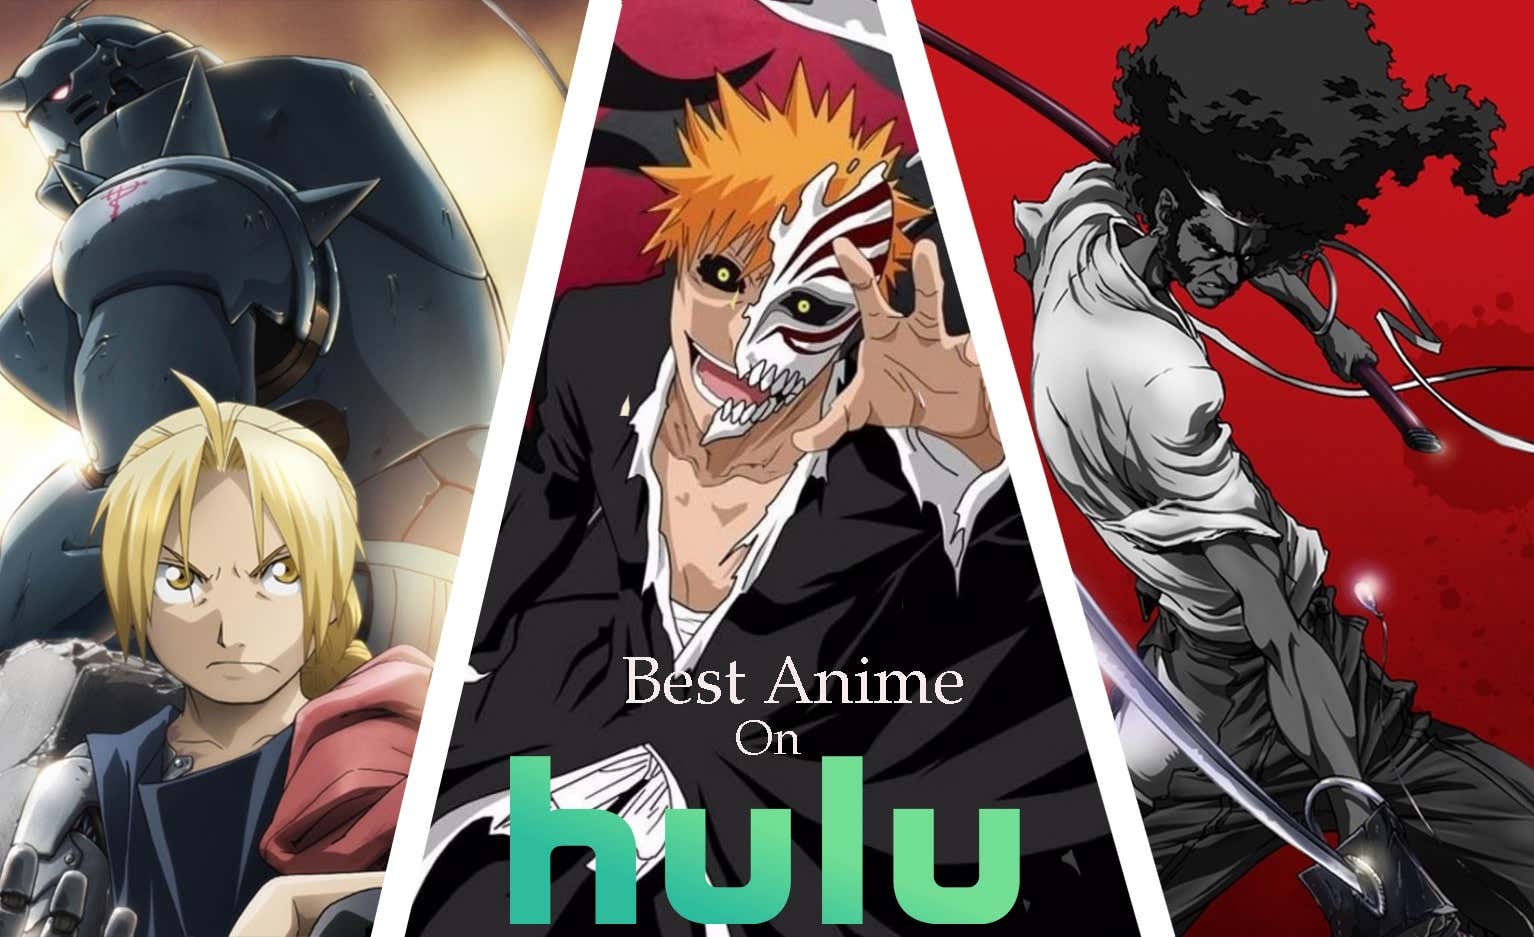 Watch Popular Anime Shows Online  Hulu Free Trial